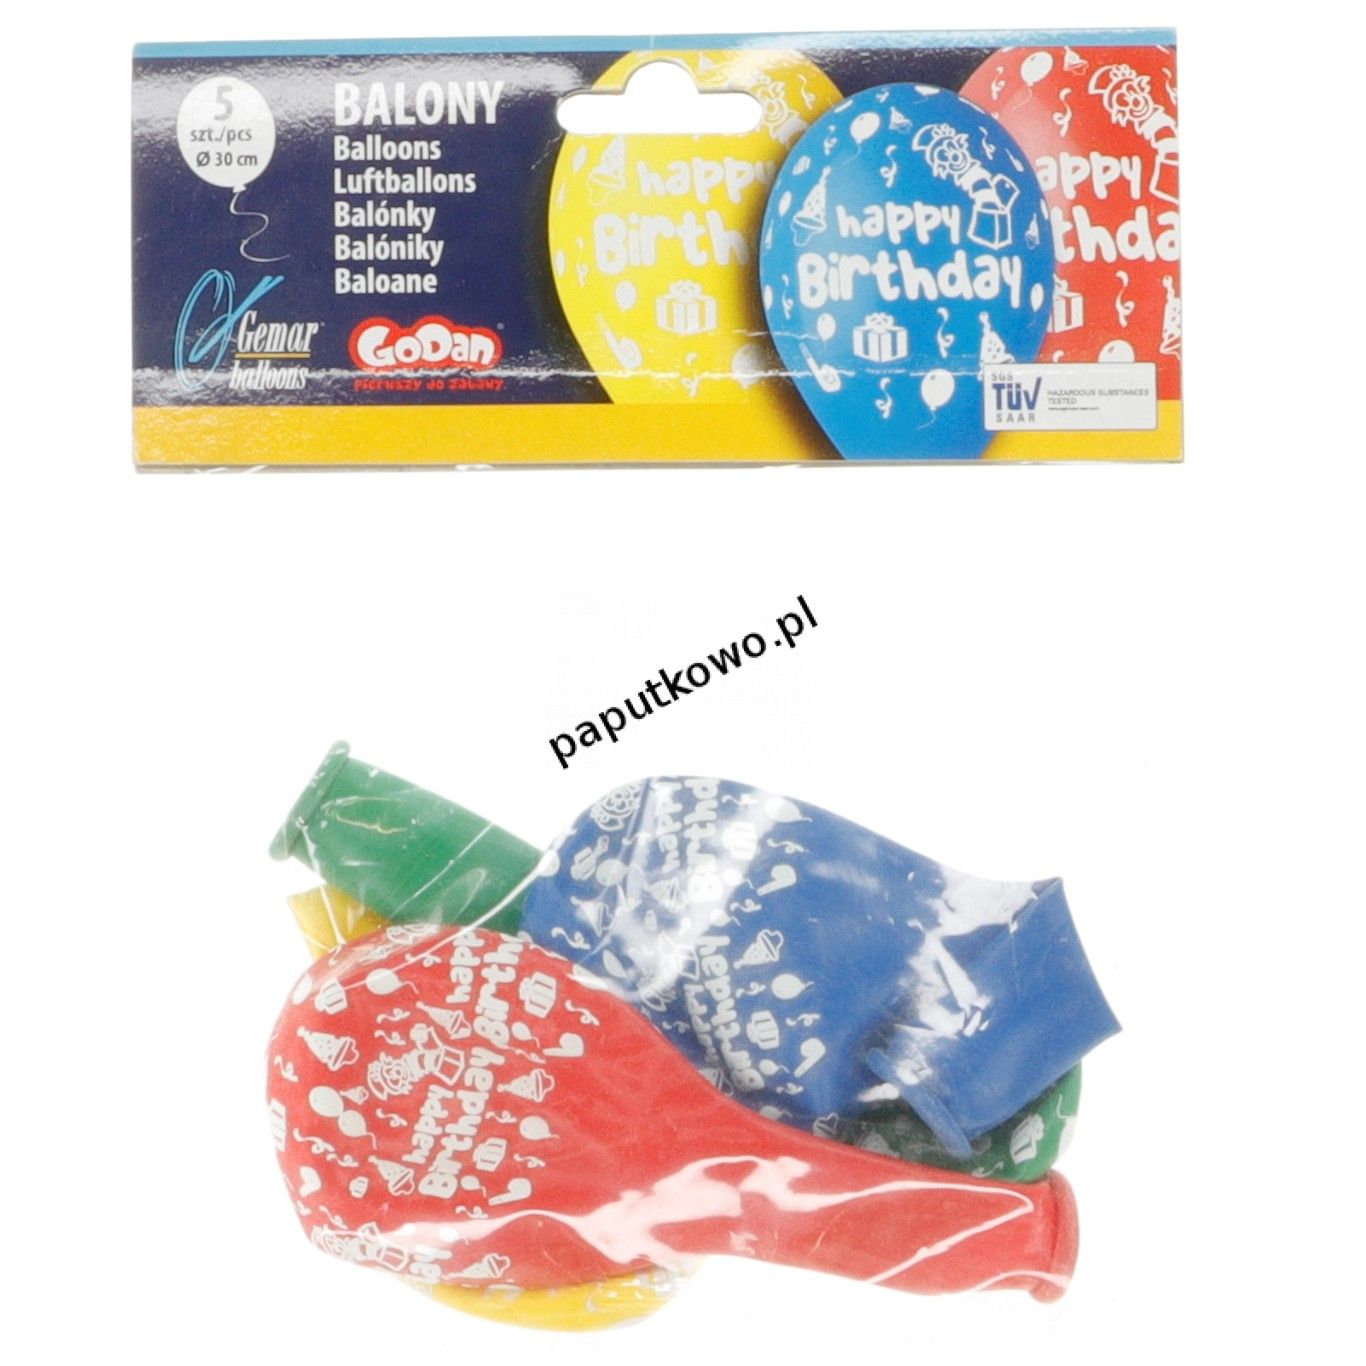 Balon gumowy Godan PREMIUM HAPPY BIRTHDAY mix 5 szt (GS110/P097)